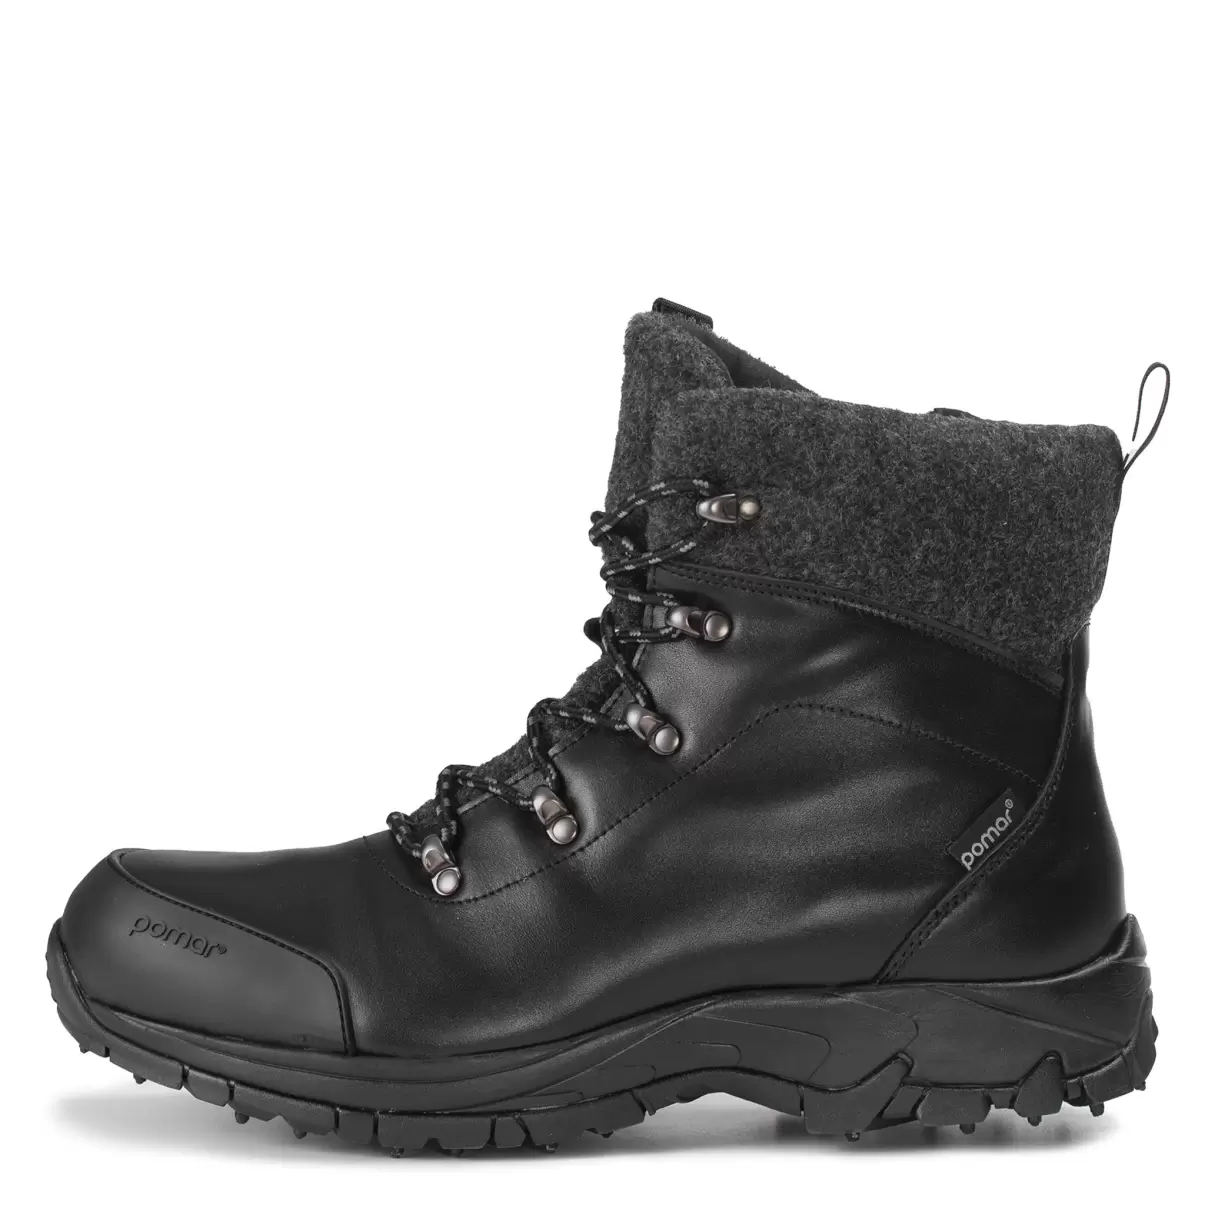 Winter Boots Pomarfin Oy Black Nappa/Gr Felt/Synt.fur Lining Otso Men's Spike Winter Boots Men